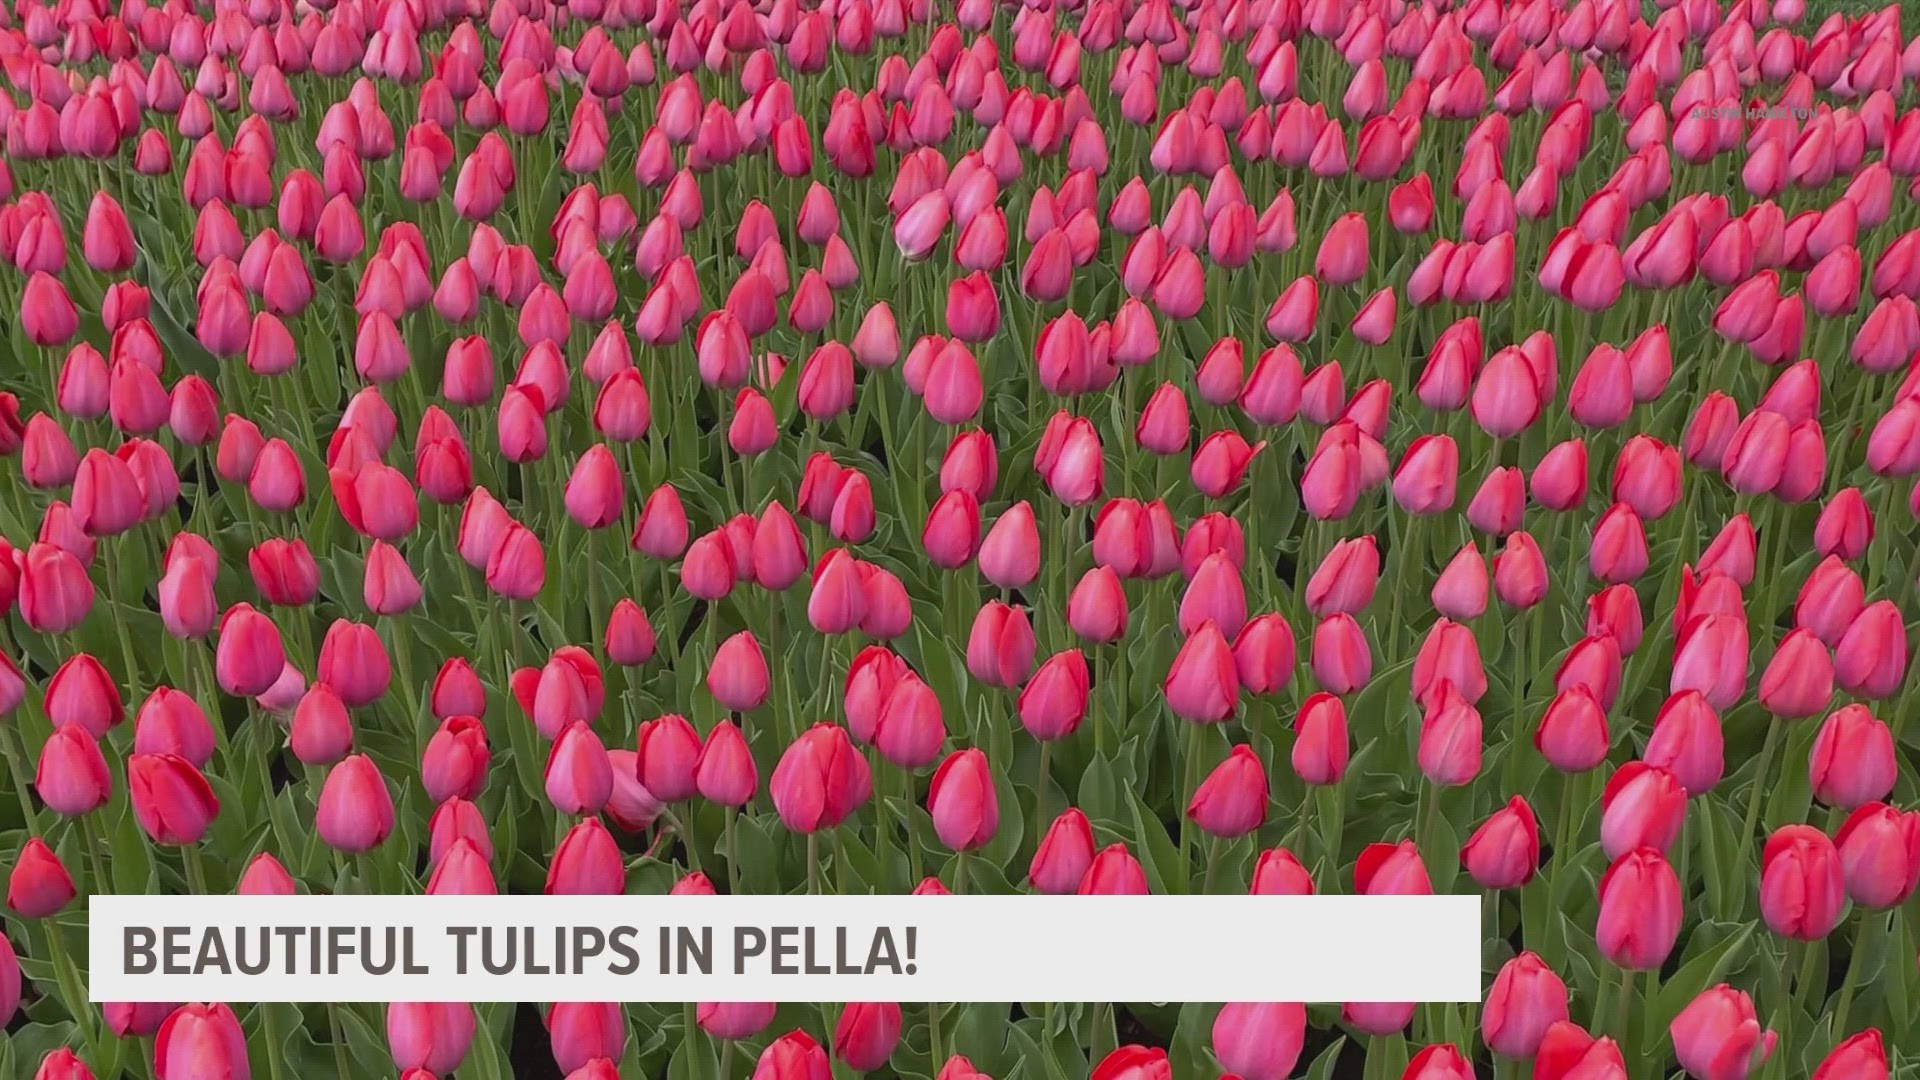 Pella's annual Tulip Time Festival begins